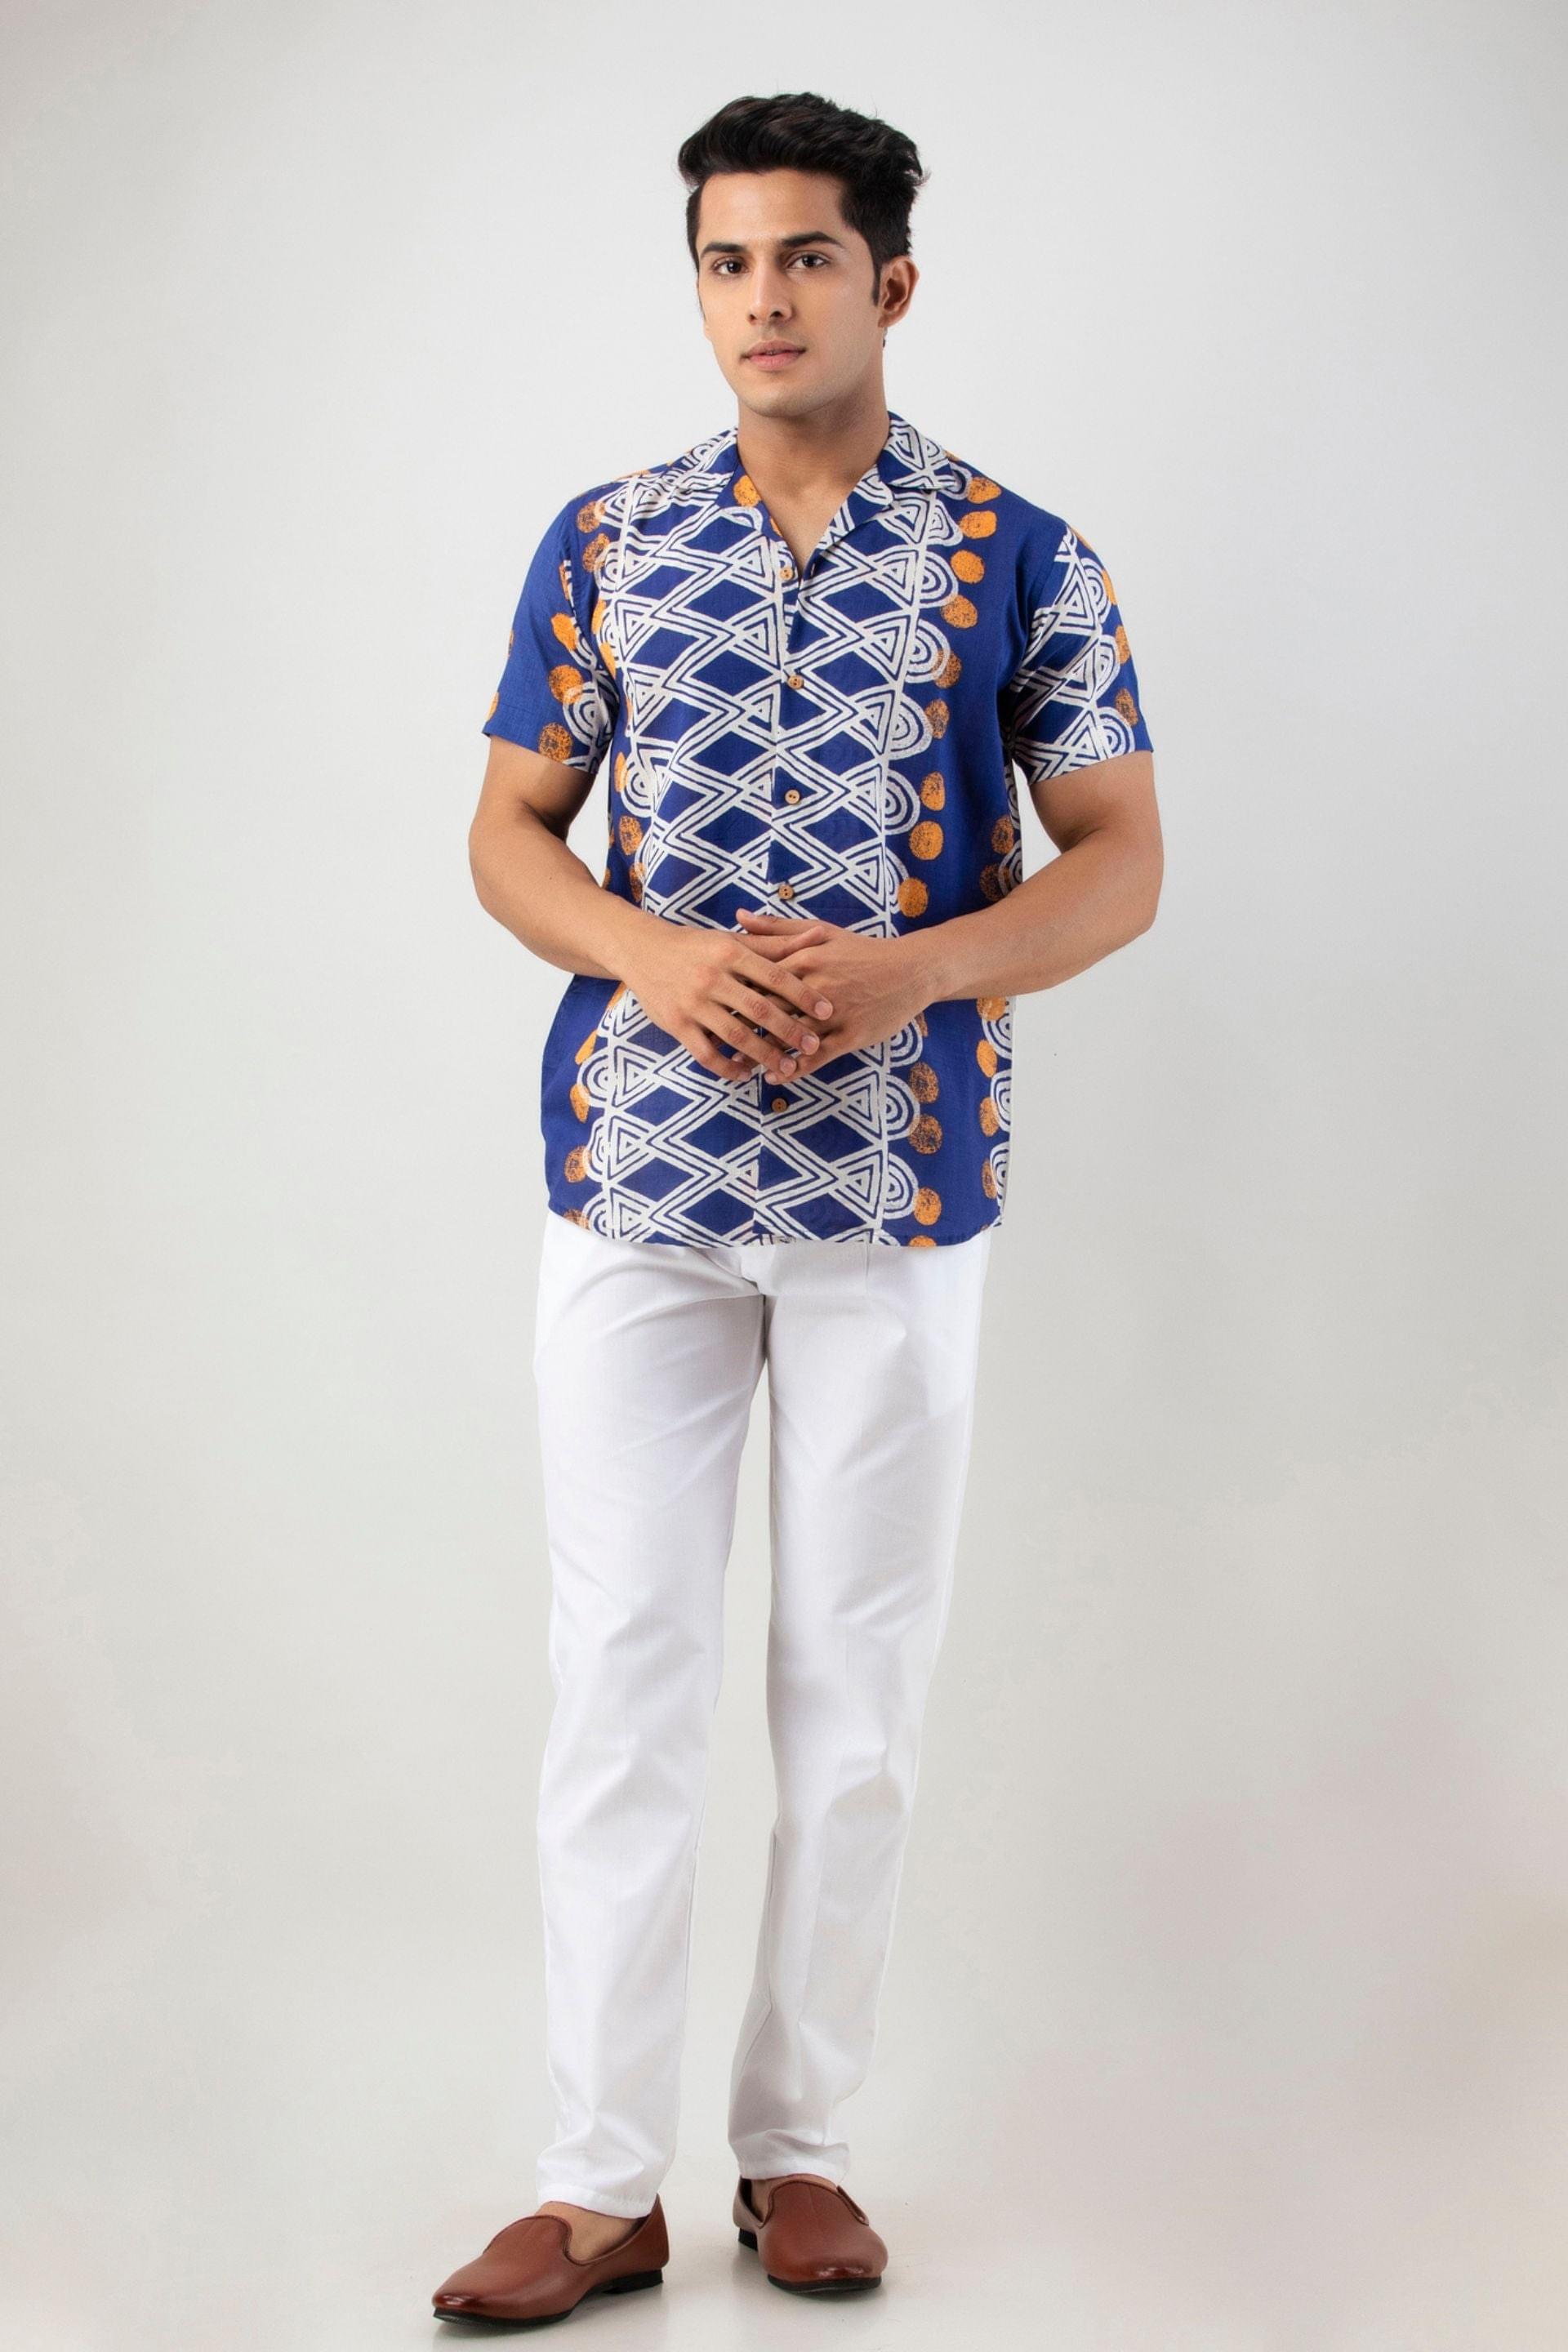 Firangi Yarn 100% Jaipuri Cotton Egyptian Pattern Printed Cuban Collar Shirt- Indigo Color